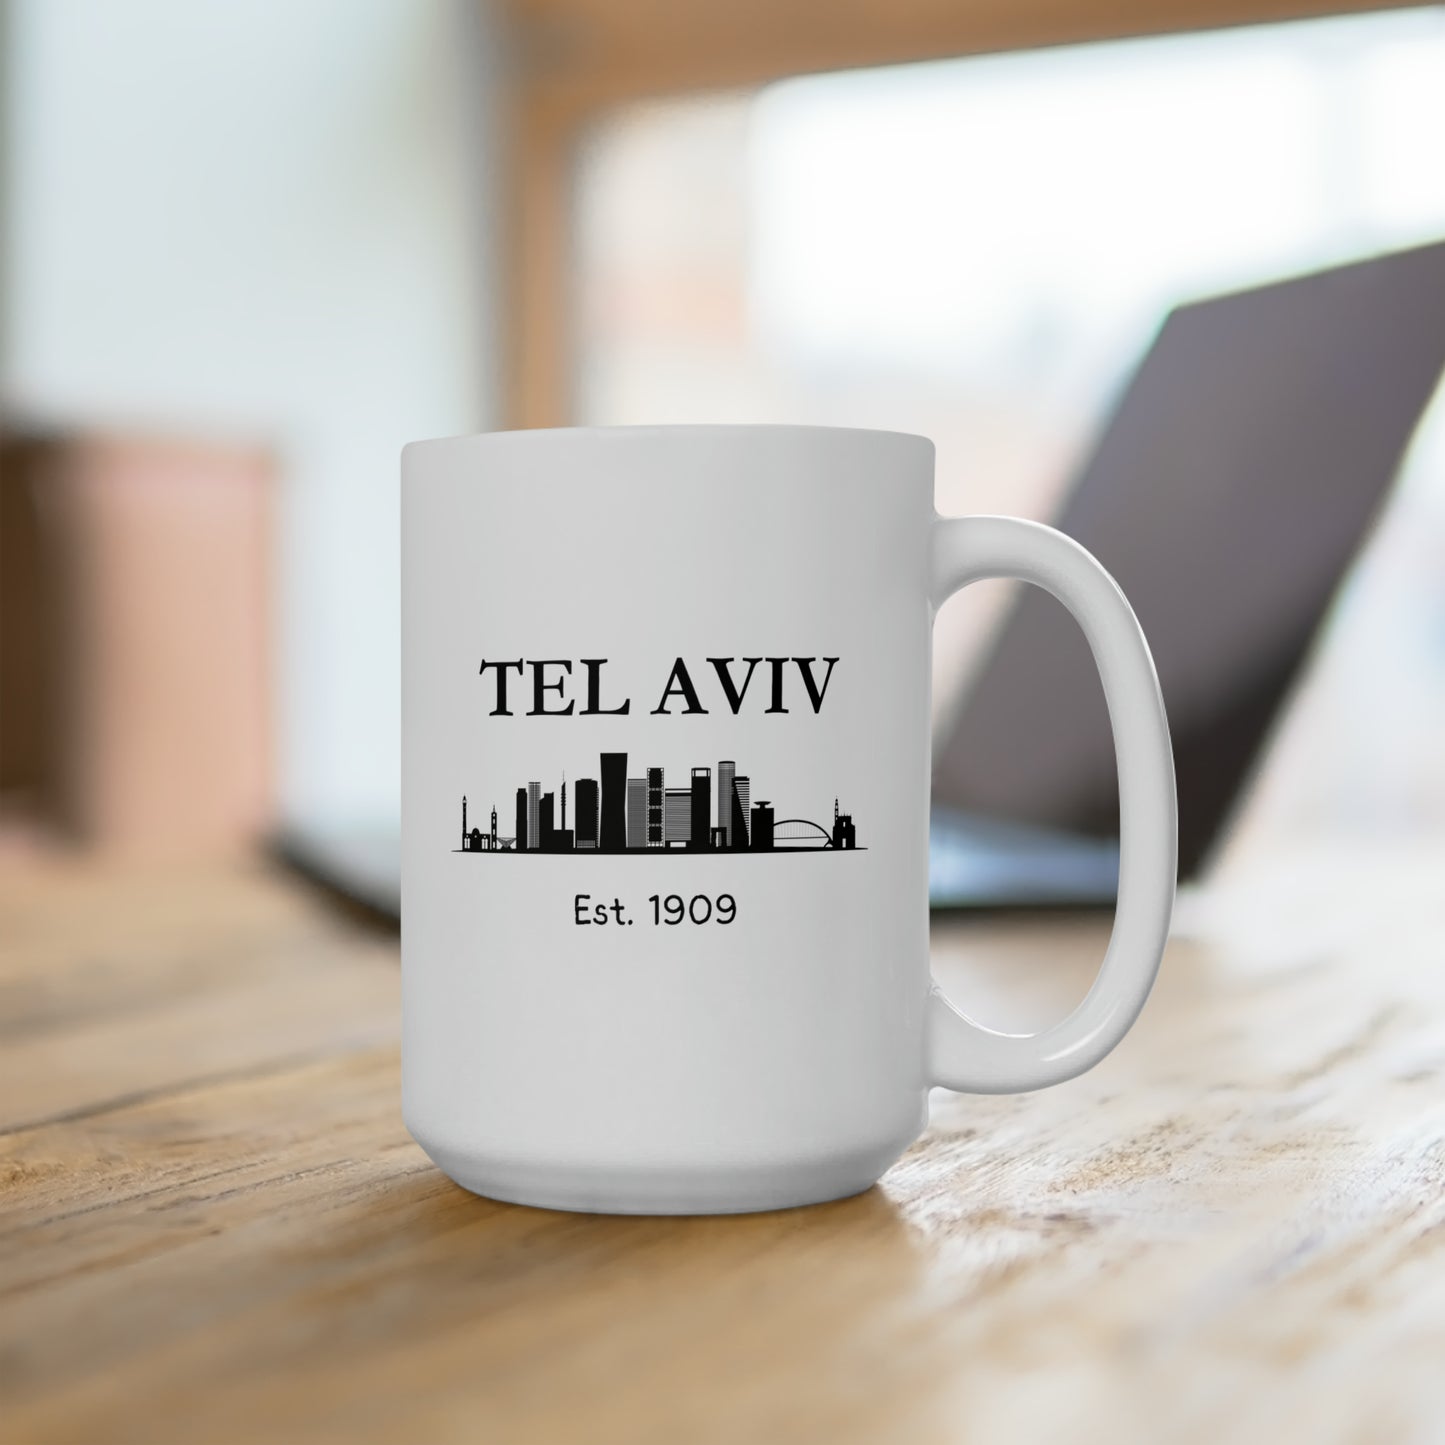 Tel Aviv - Est. 1909 - Ceramic Coffee Mug, 15oz